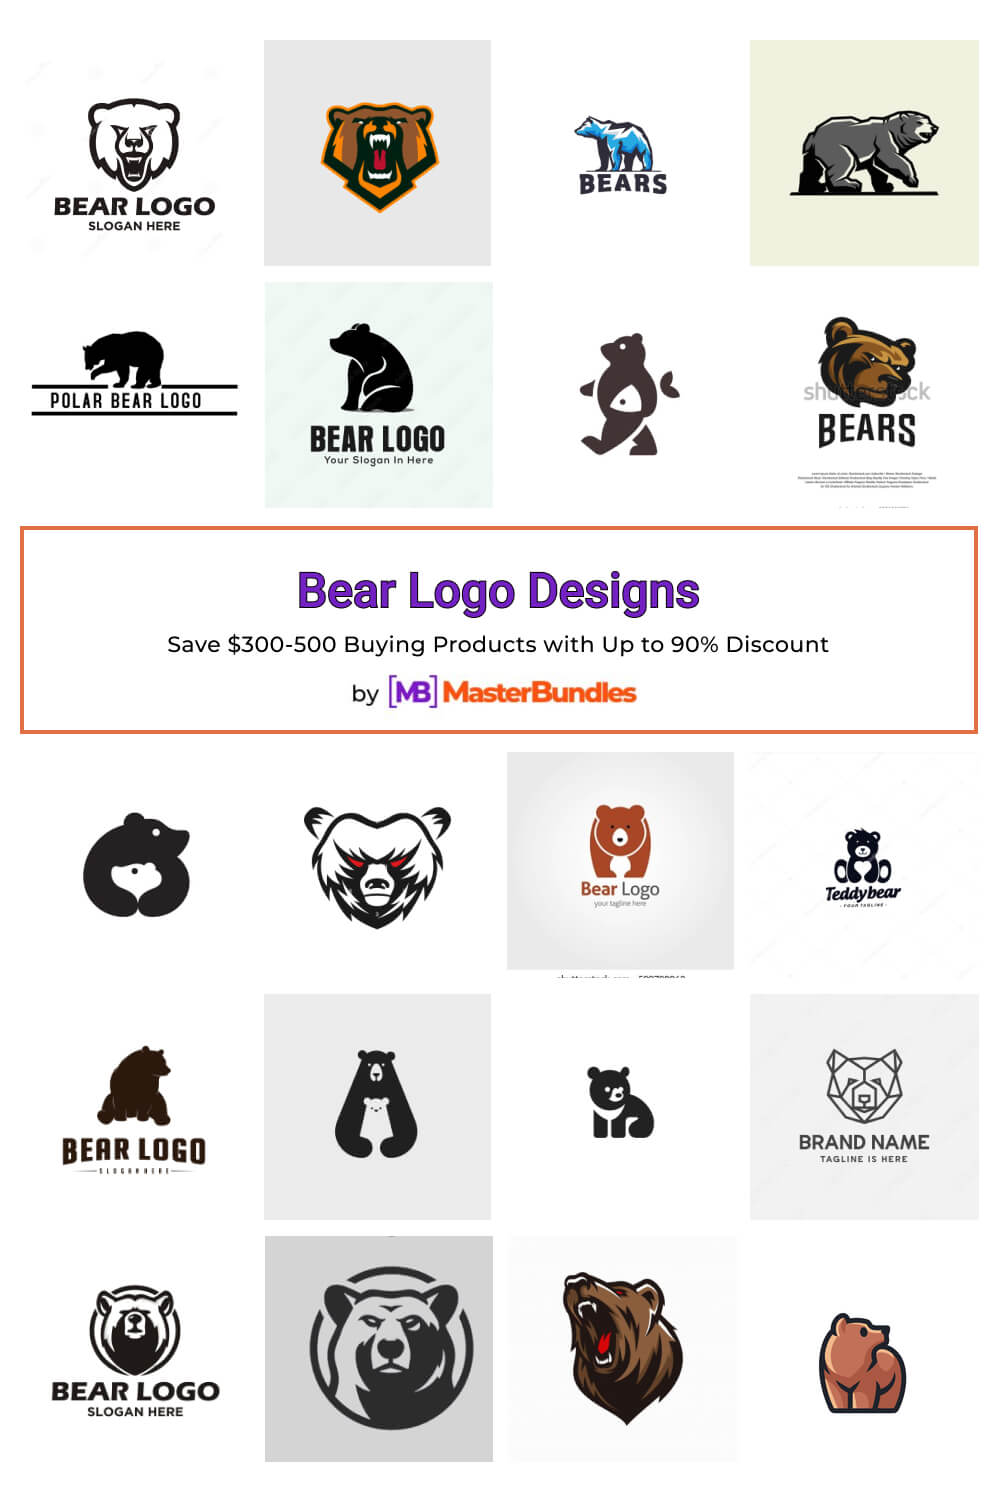 bear logo designs pinterest image.